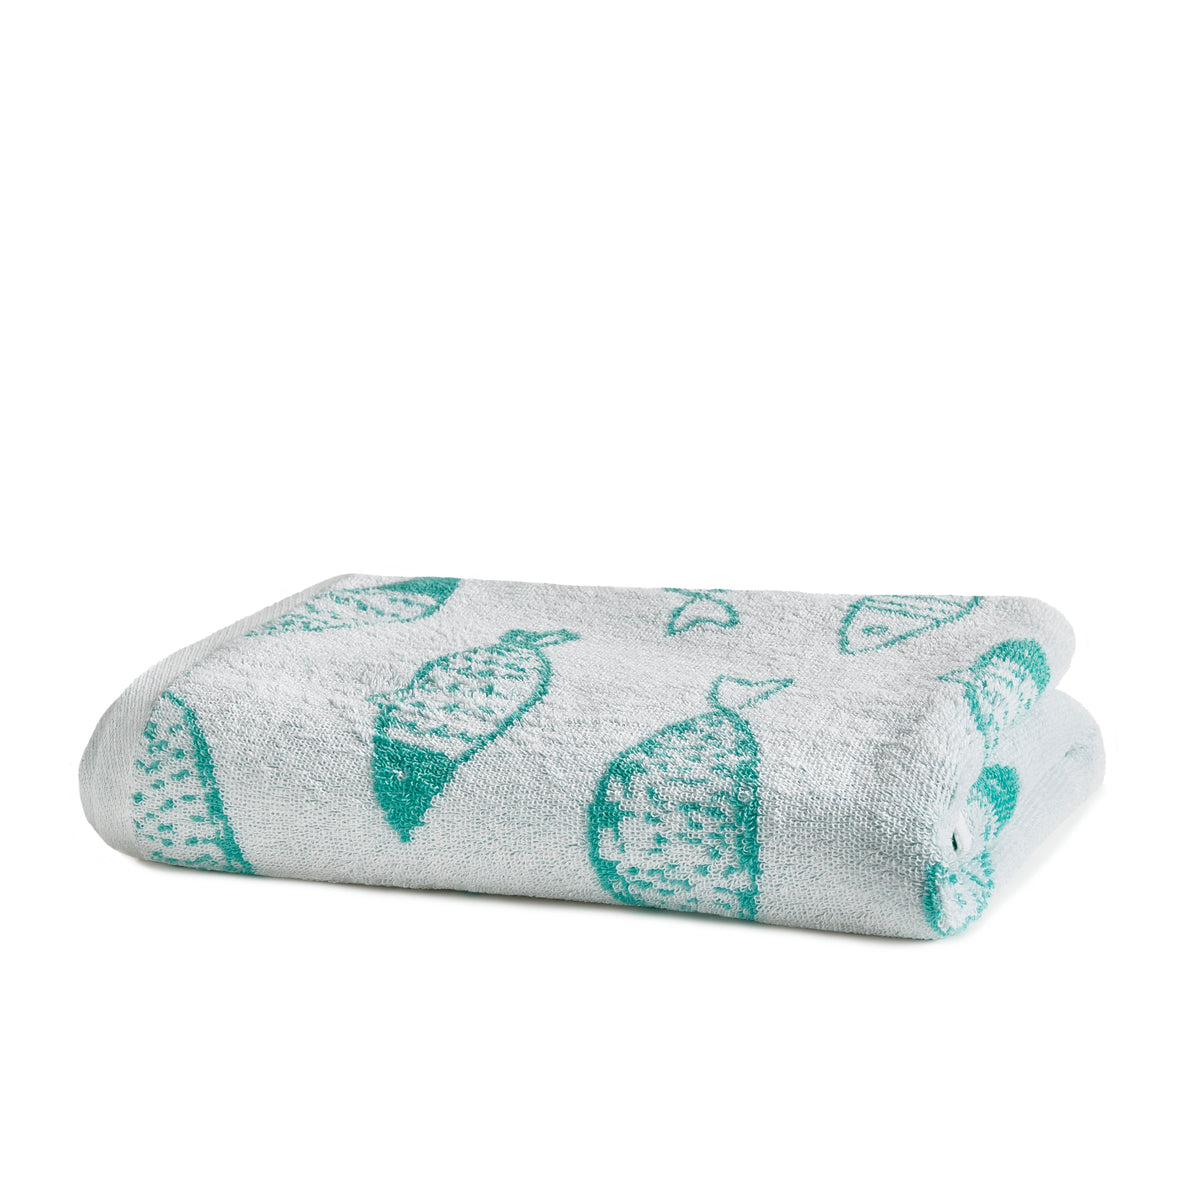 Fish Hand Towel (2 pack) by Fusion Bathroom in Aqua/White 50 x 90cm